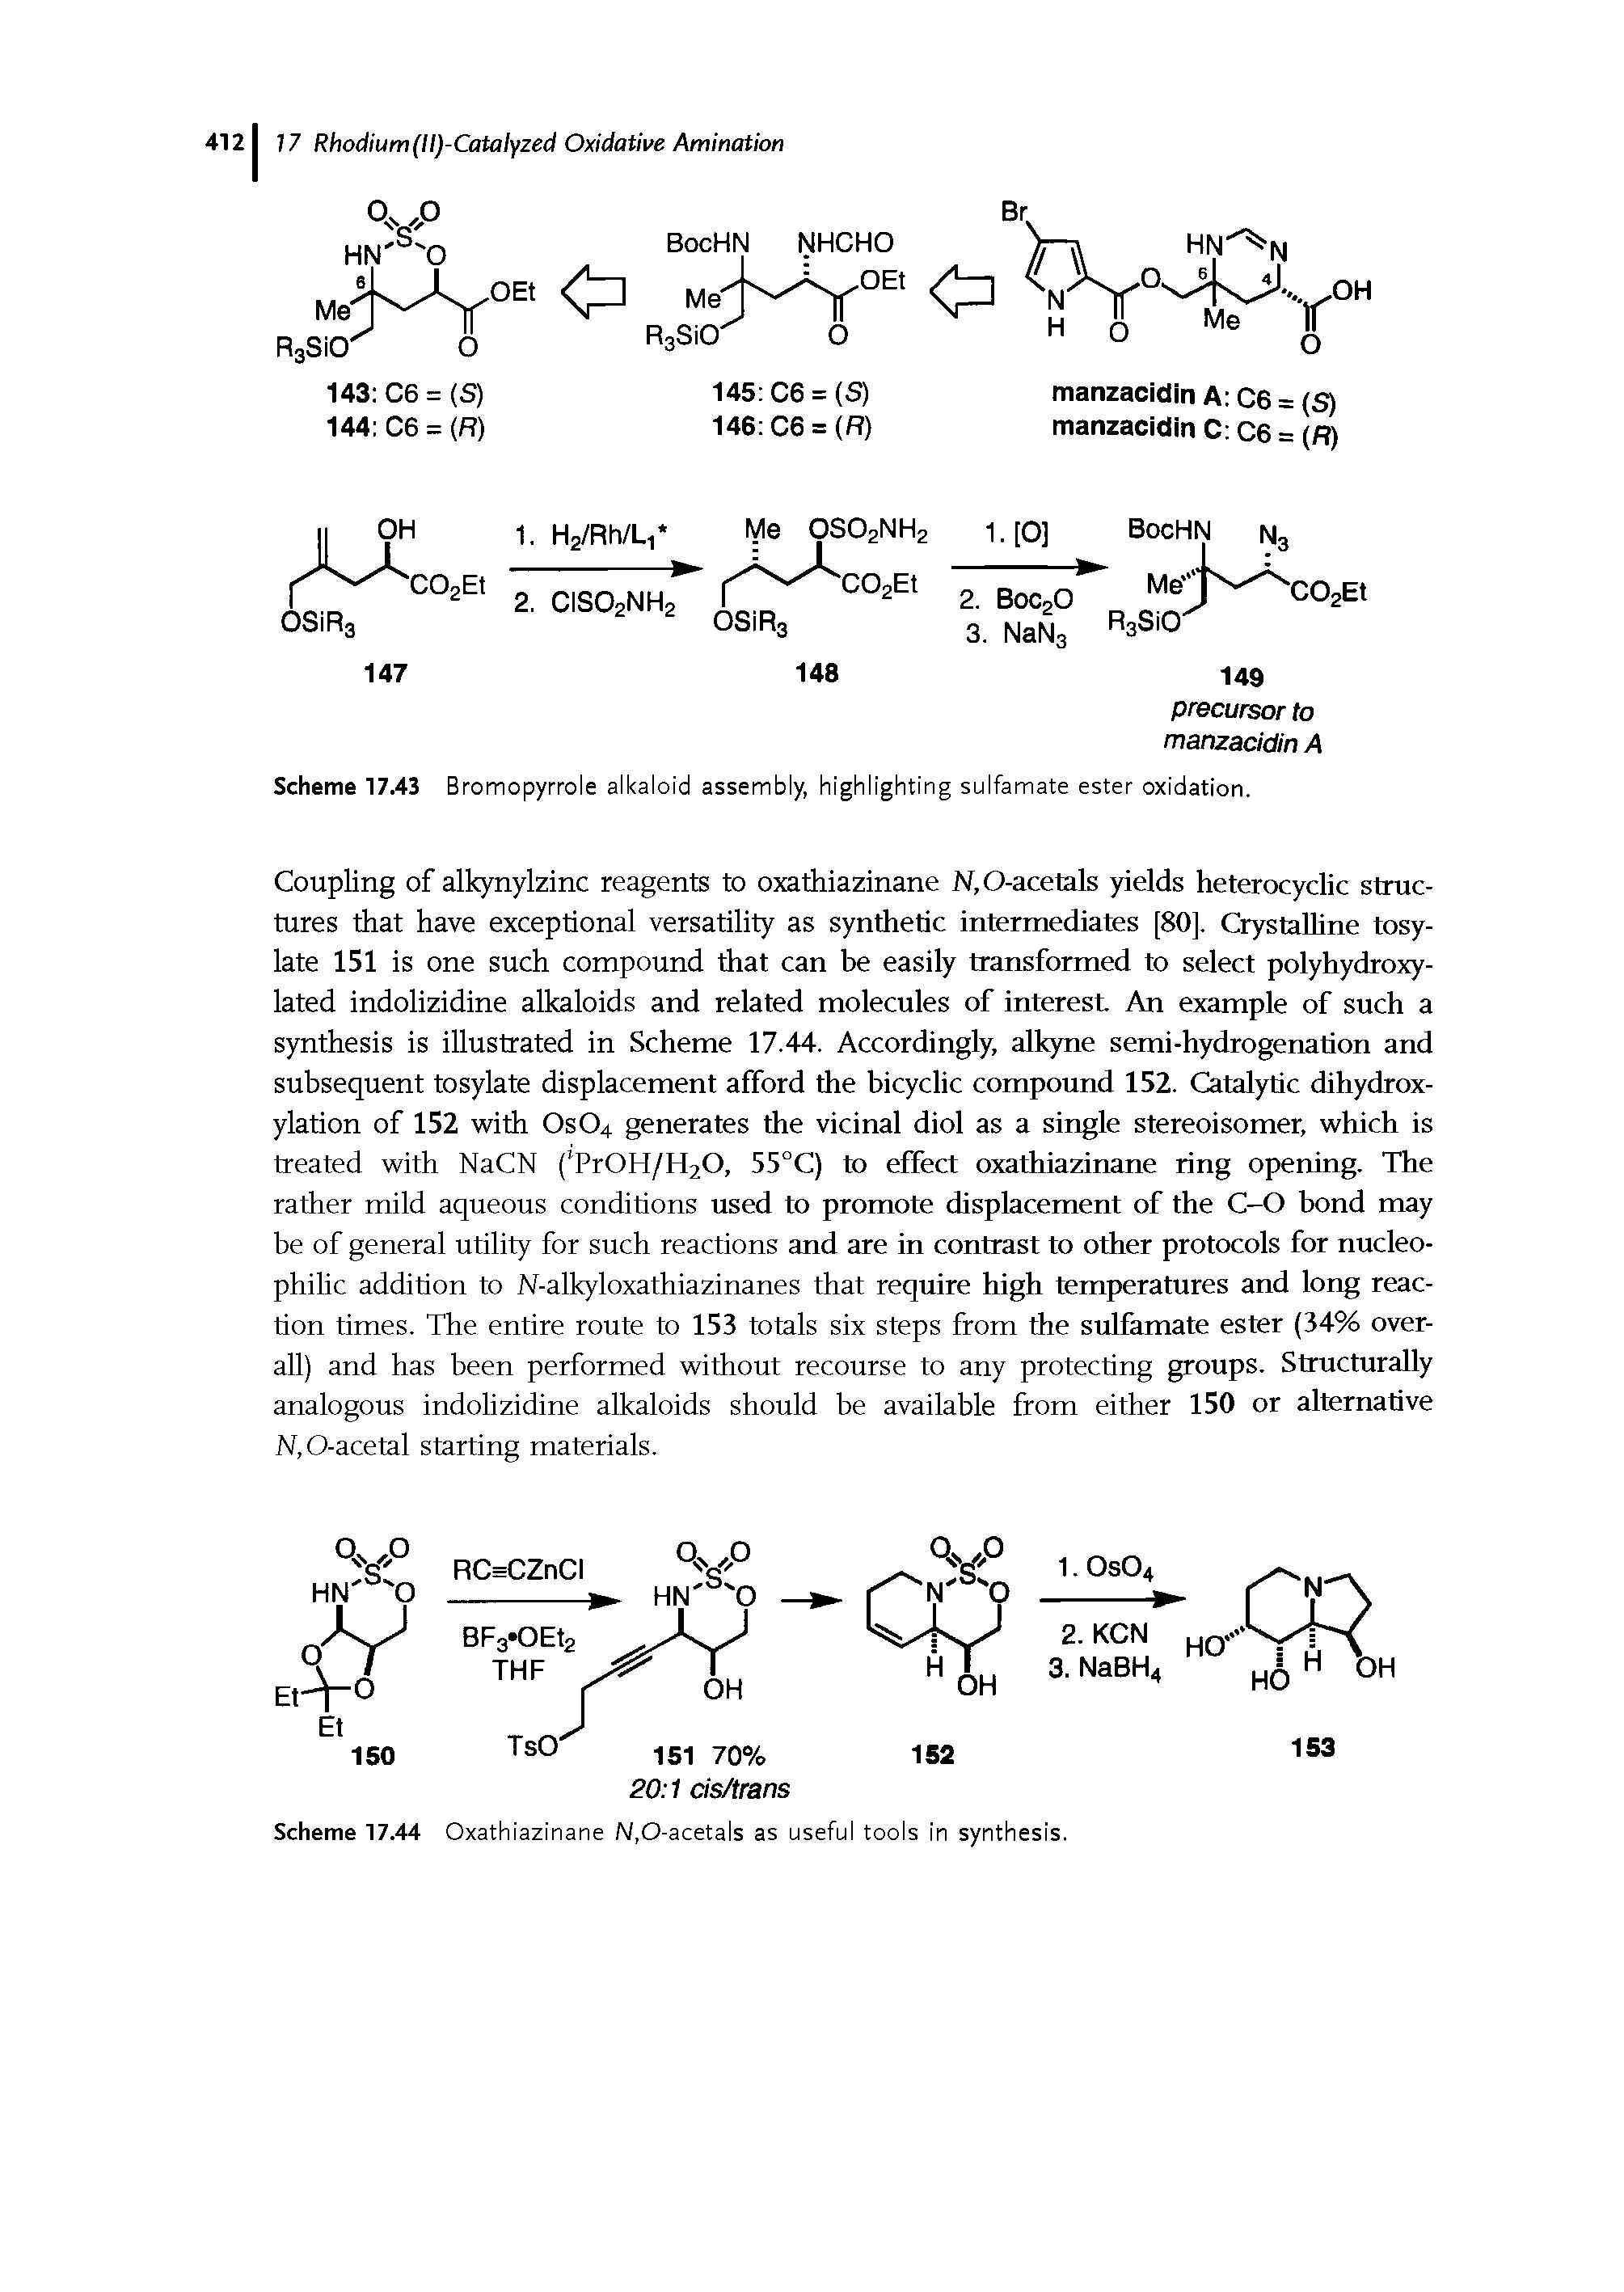 Scheme 17.43 Bromopyrrole alkaloid assembly, highlighting sulfamate ester oxidation.